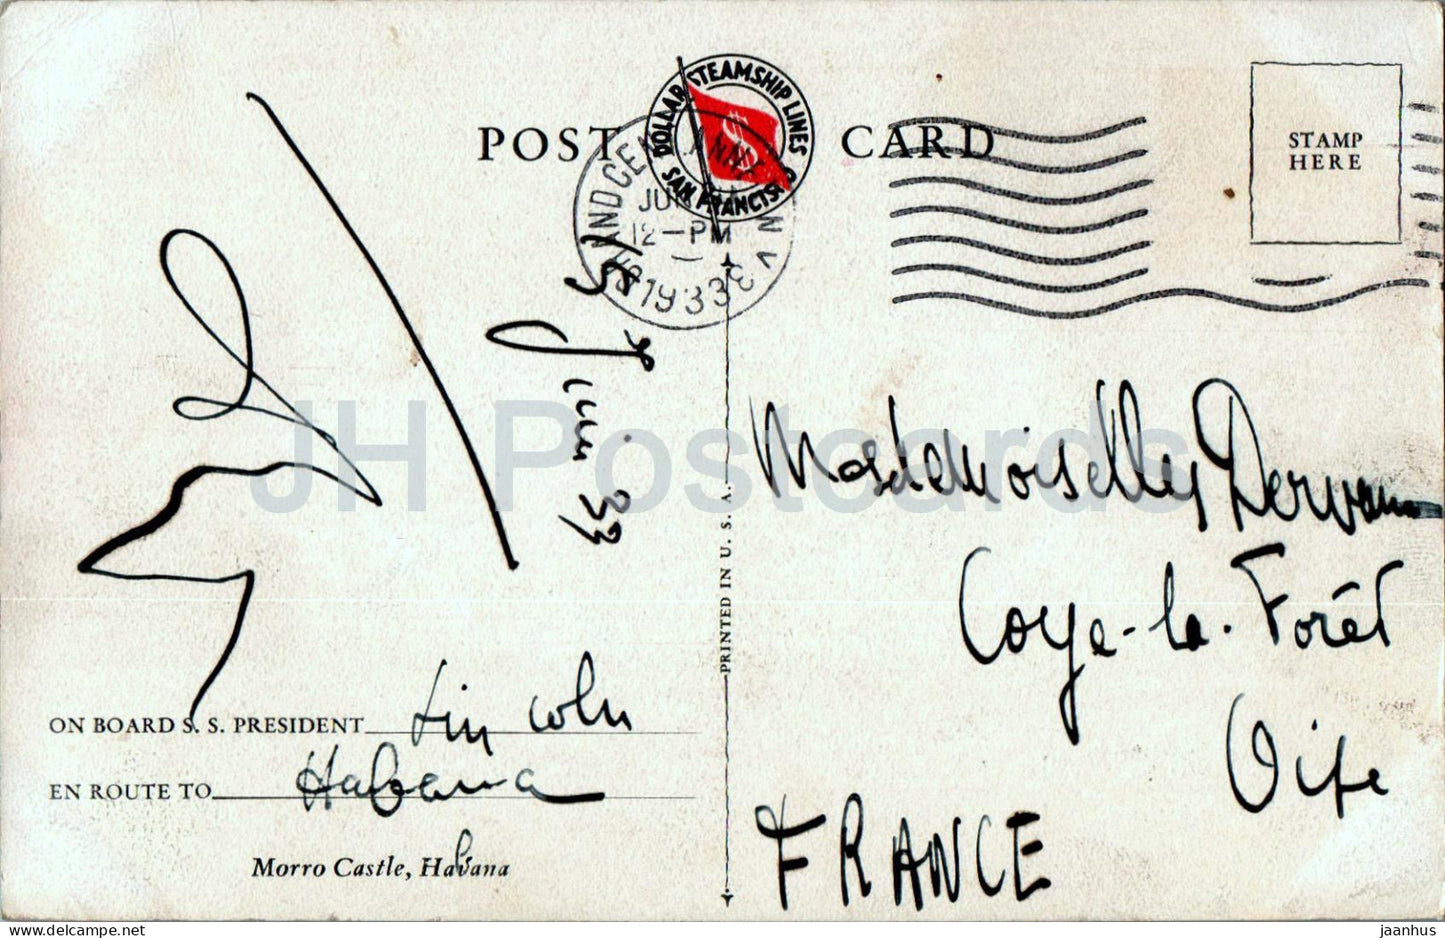 La Havane - Château de Morro - phare - bateau - navire - Dollar Steamship Lines - carte postale ancienne - 1933 - Cuba - utilisé 